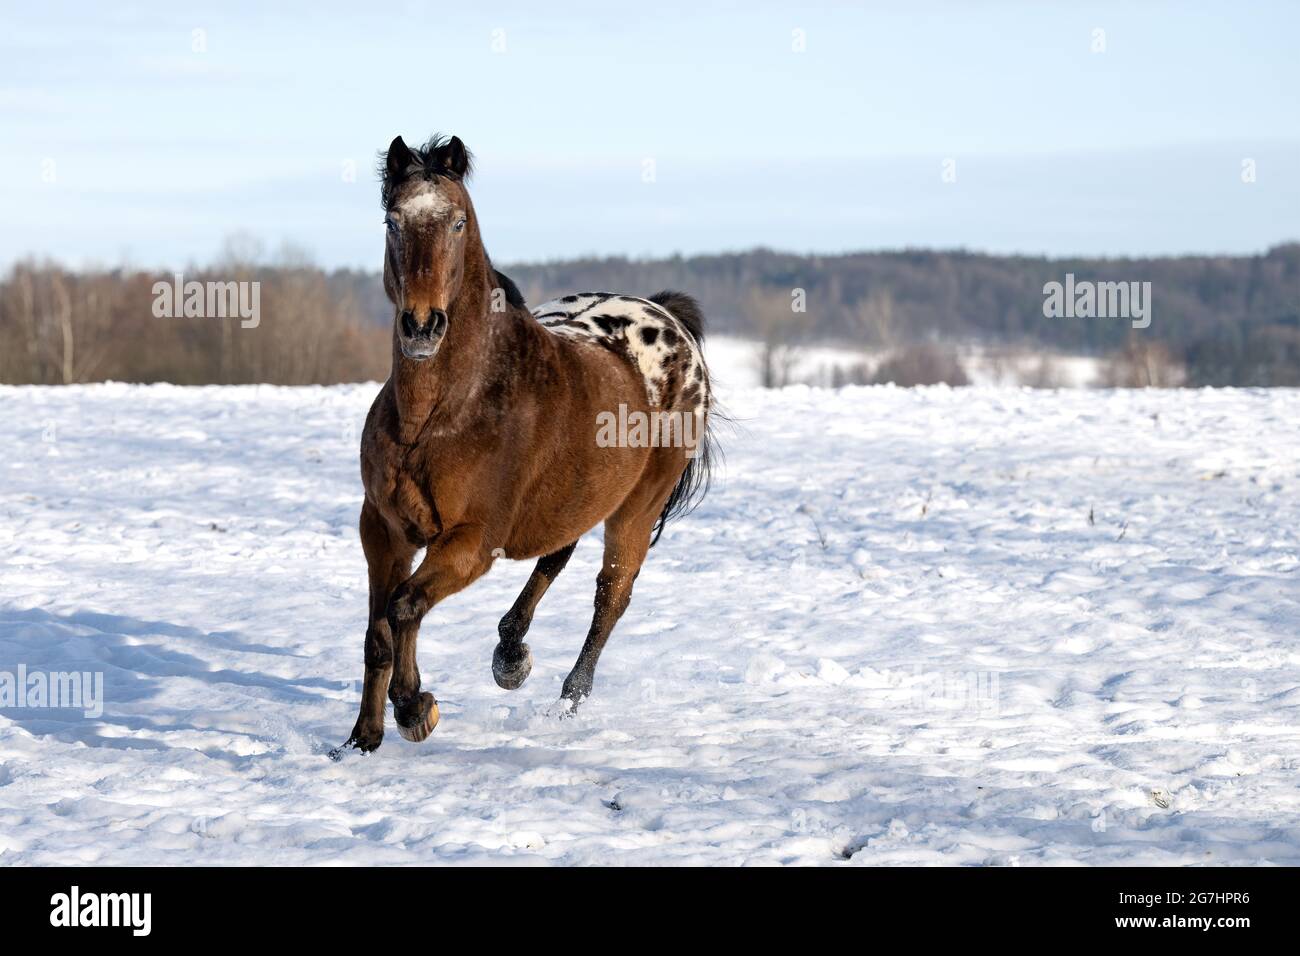 The horse runs merrily across the snowy pasture. Stock Photo